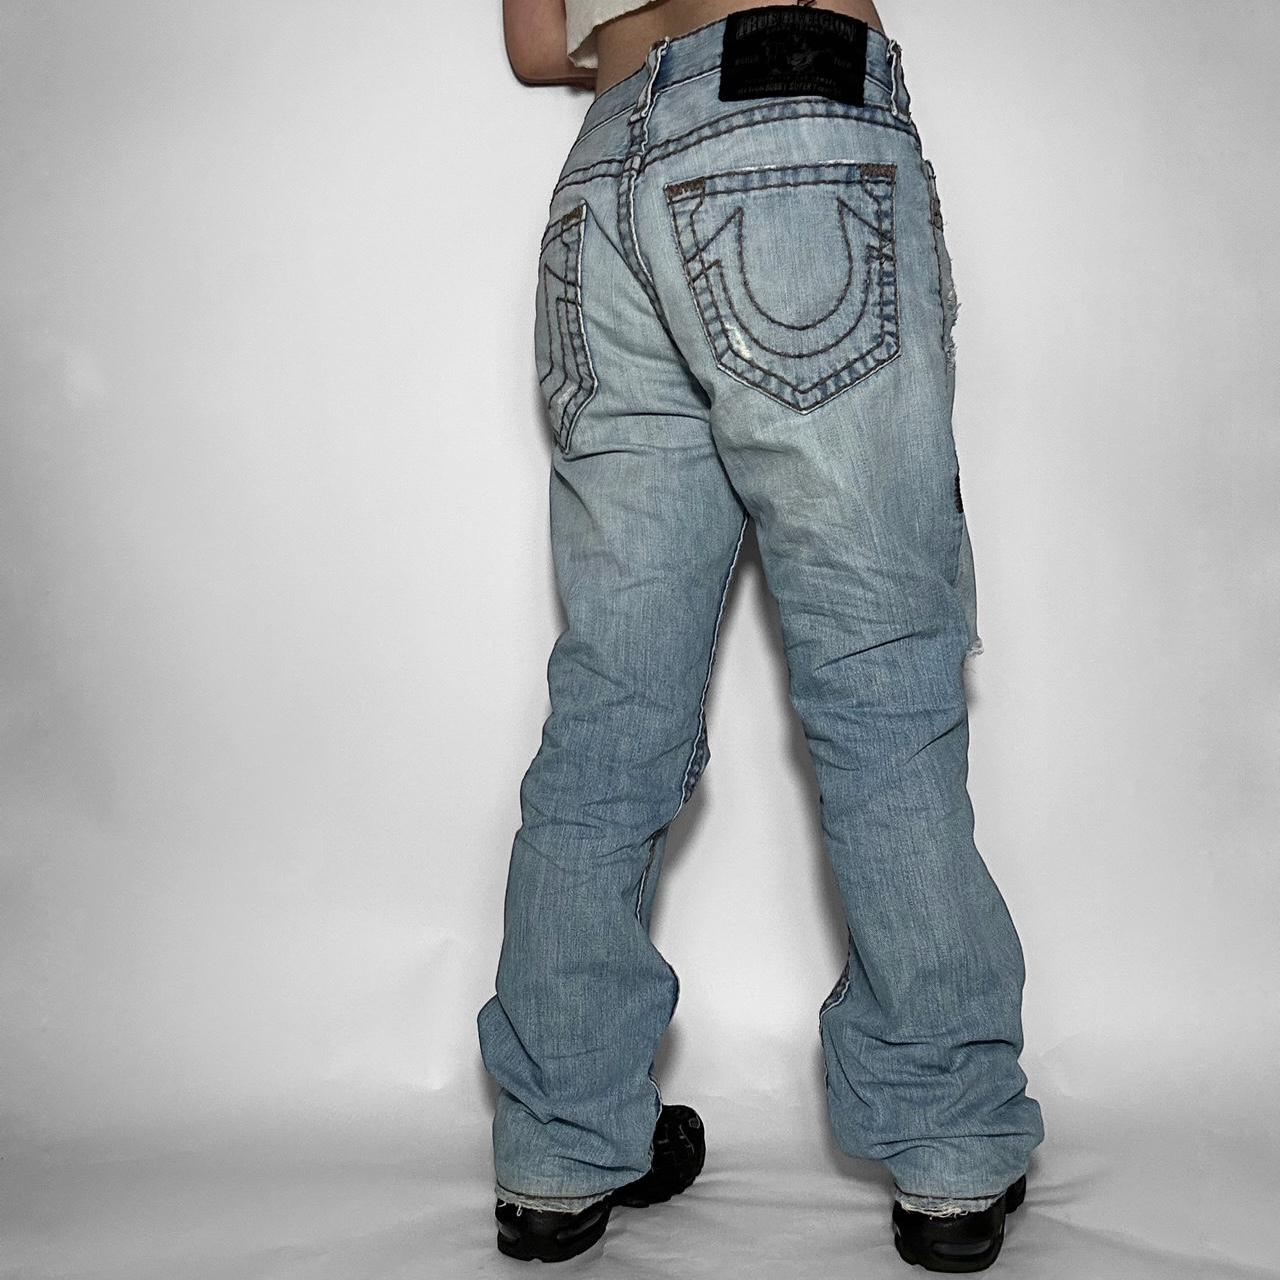 Vintage 90s True Religion light wash Bobby Super T baggy jeans